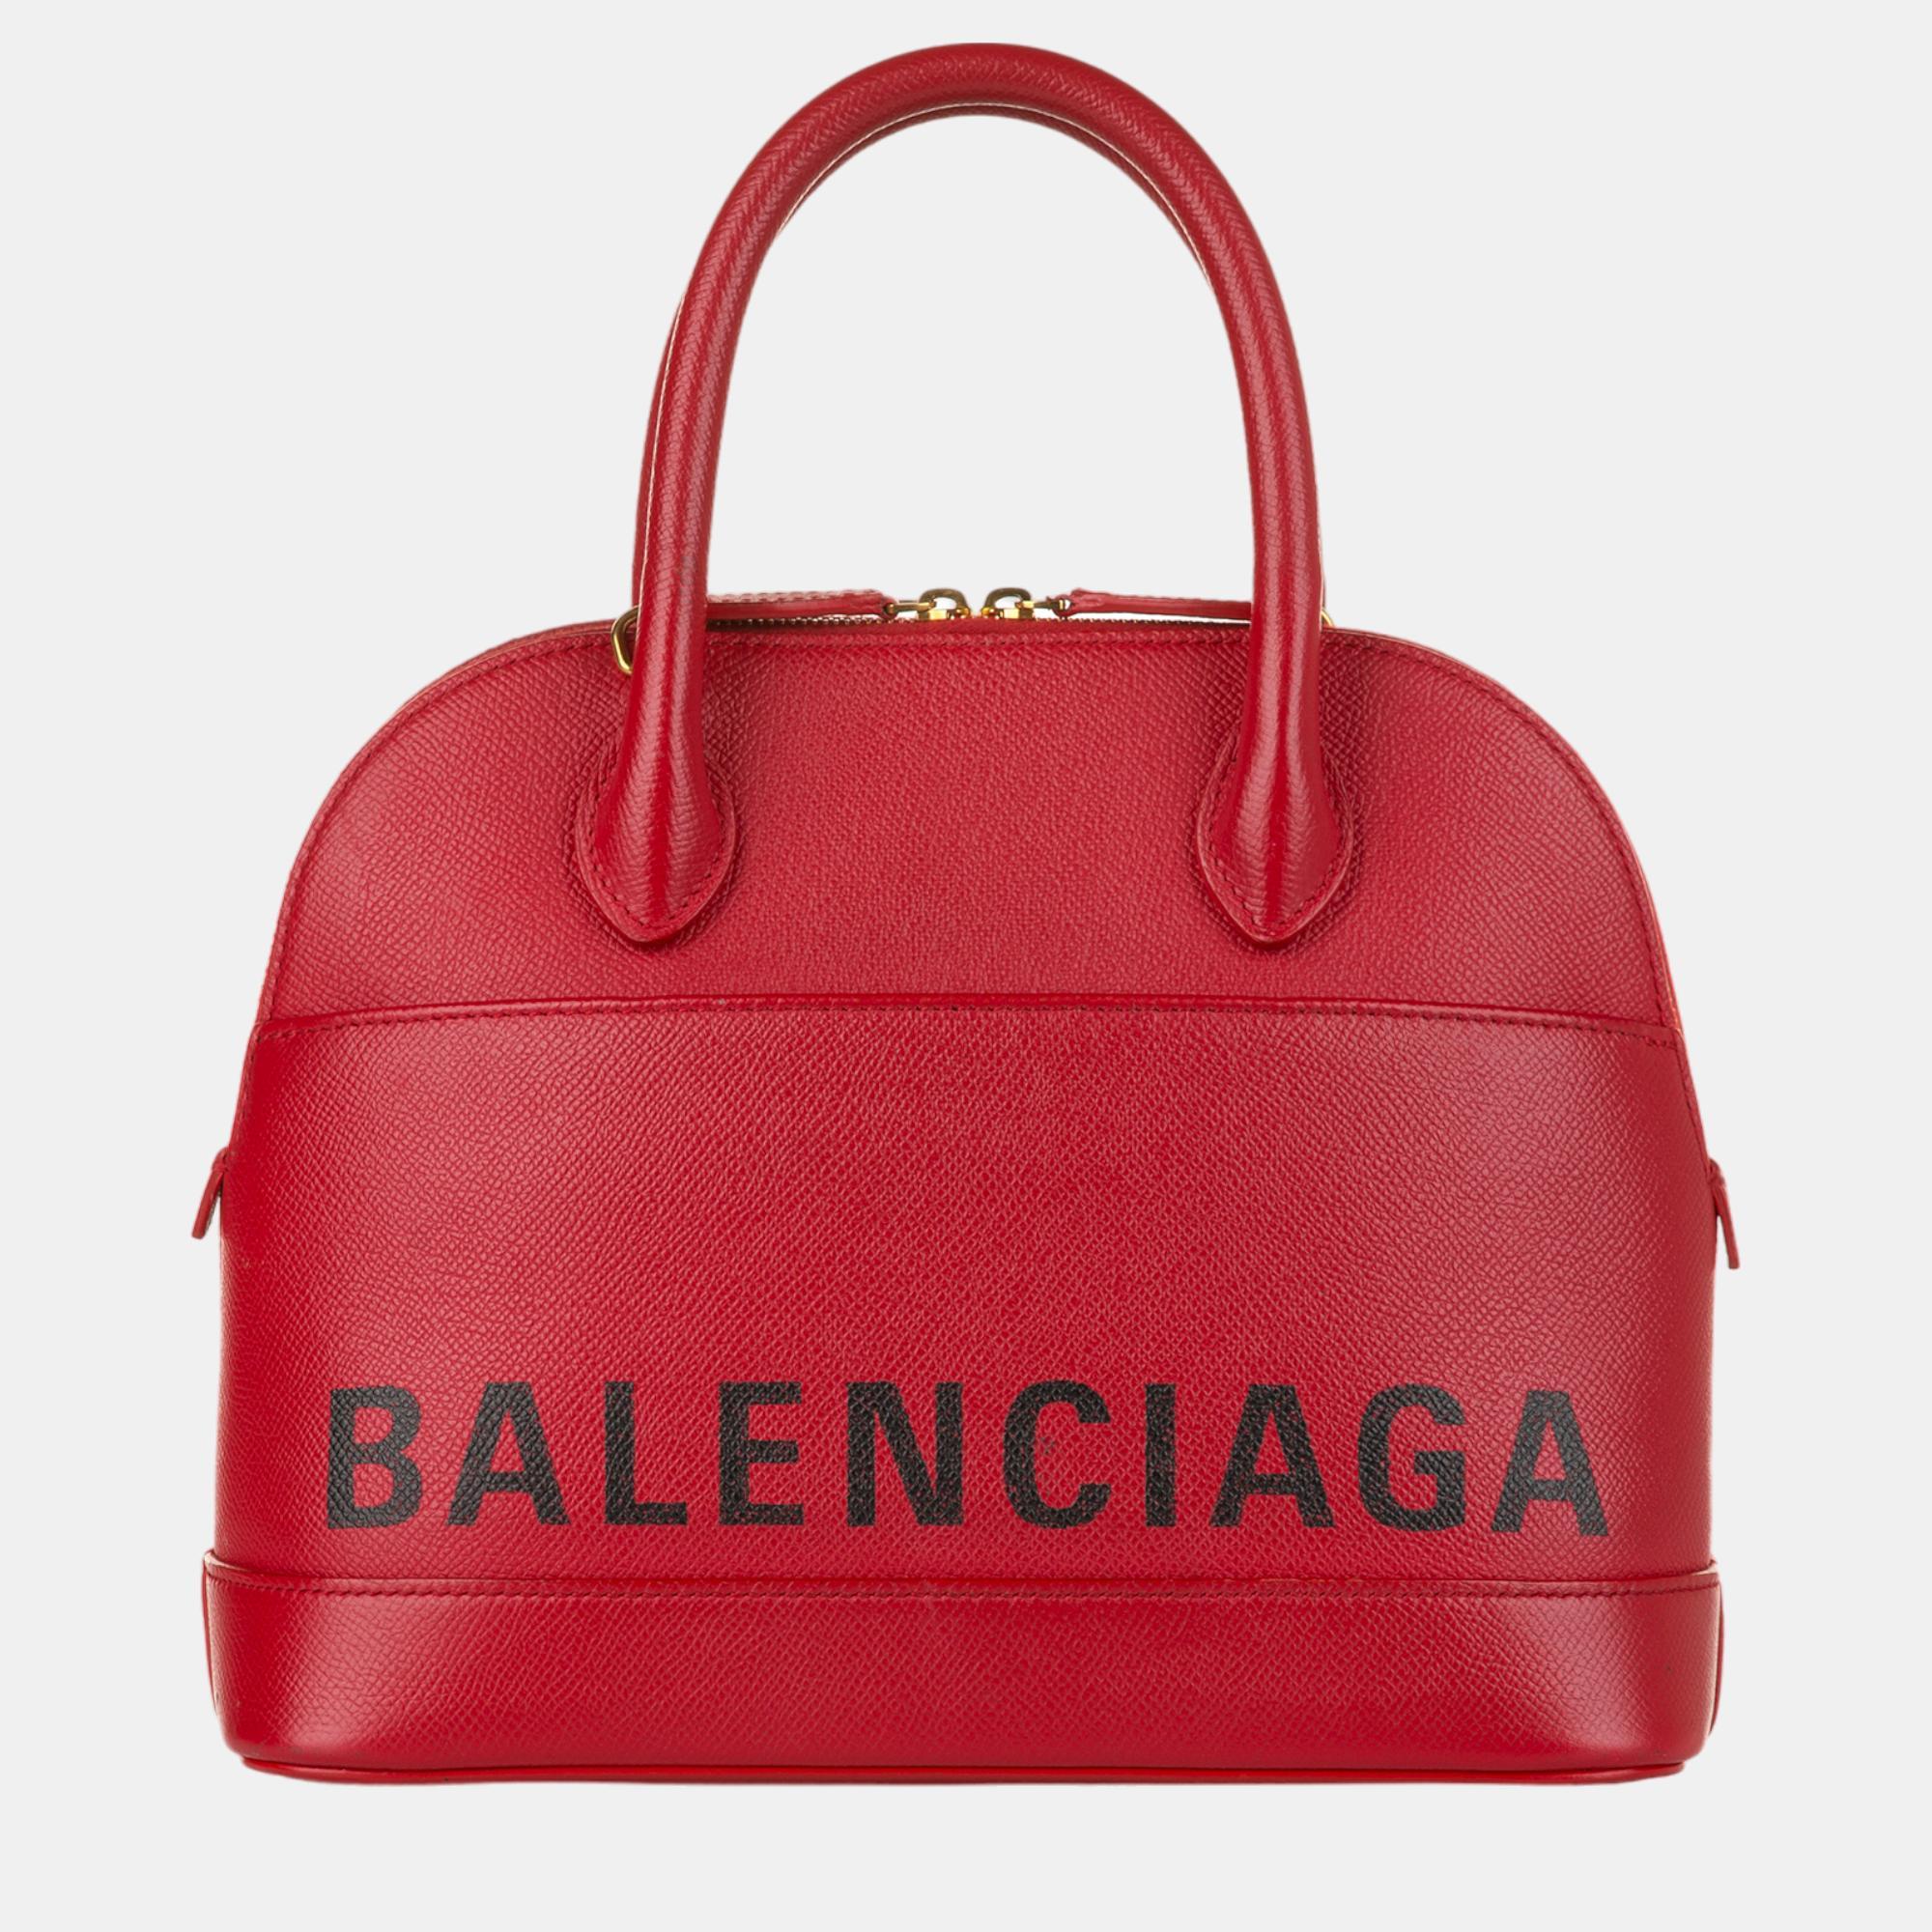 Balenciaga Red Ville Leather Satchel